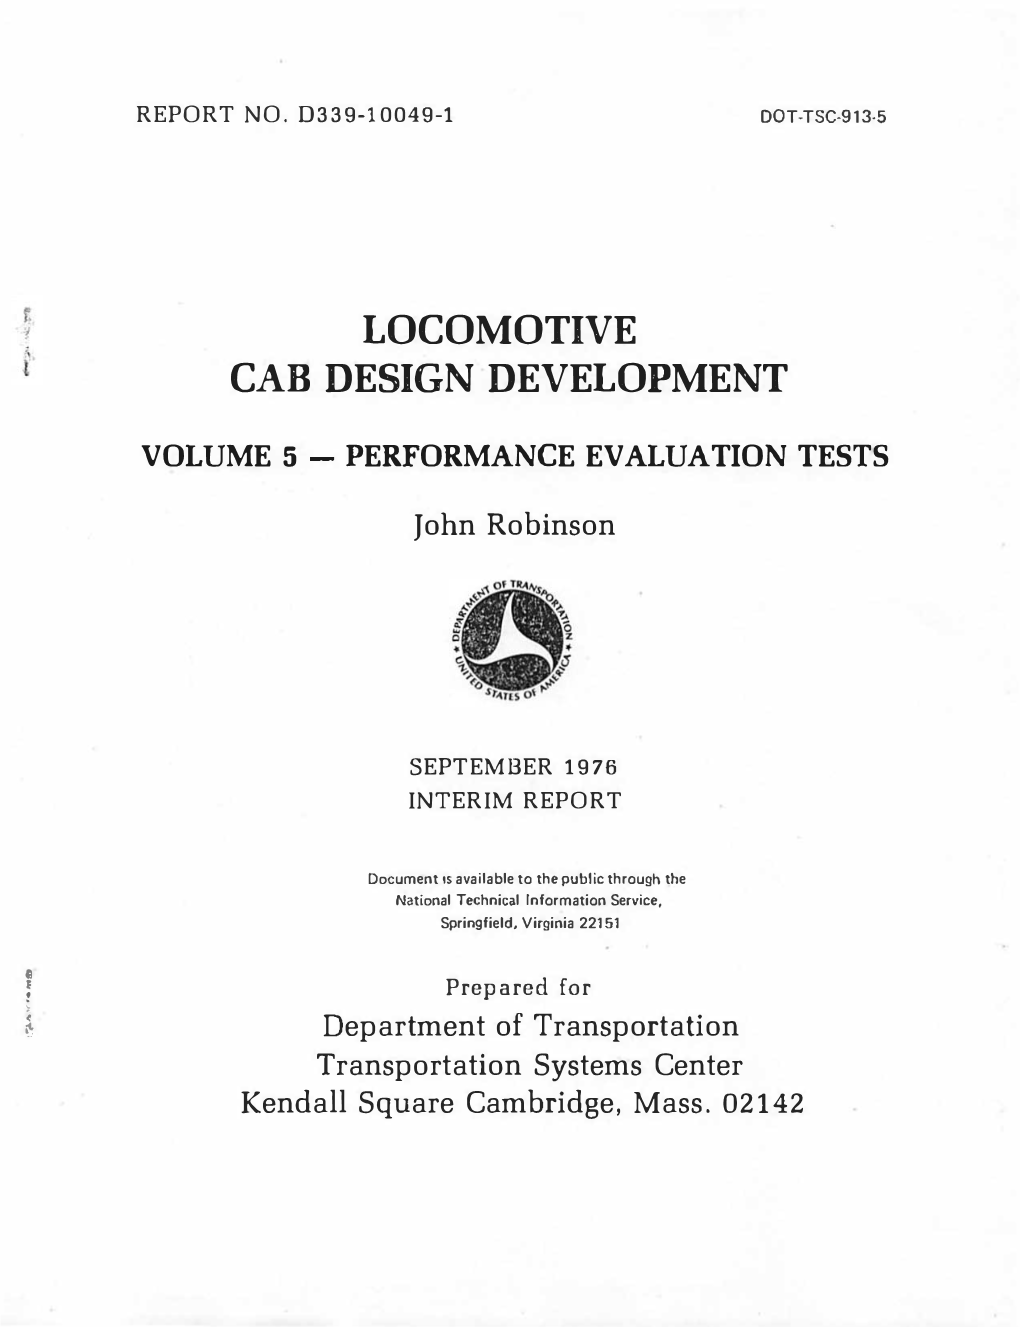 Locomotive Cab Design Development Vol 5 - Performance Eval Uation Tests 6